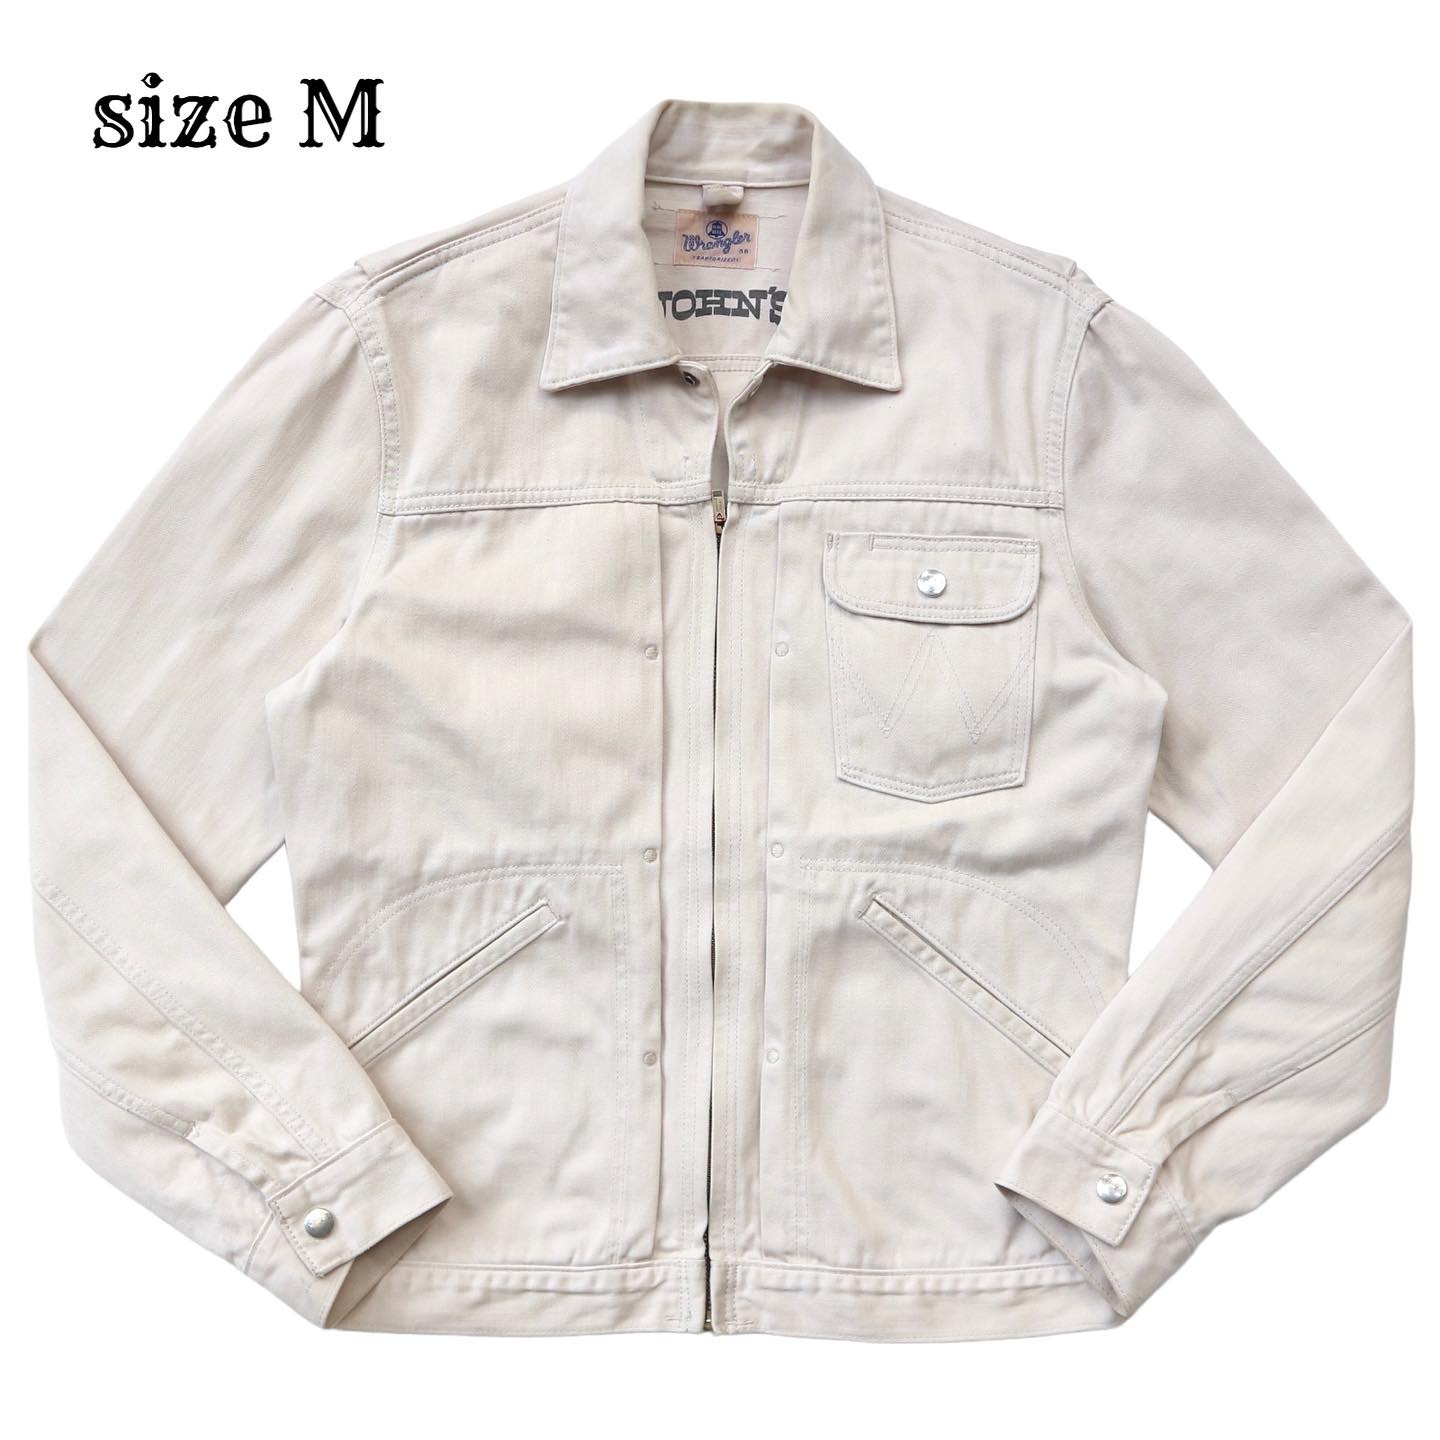 Wrangler x John’s Clothing Tokyo Model 33MJZ Jacket Size M